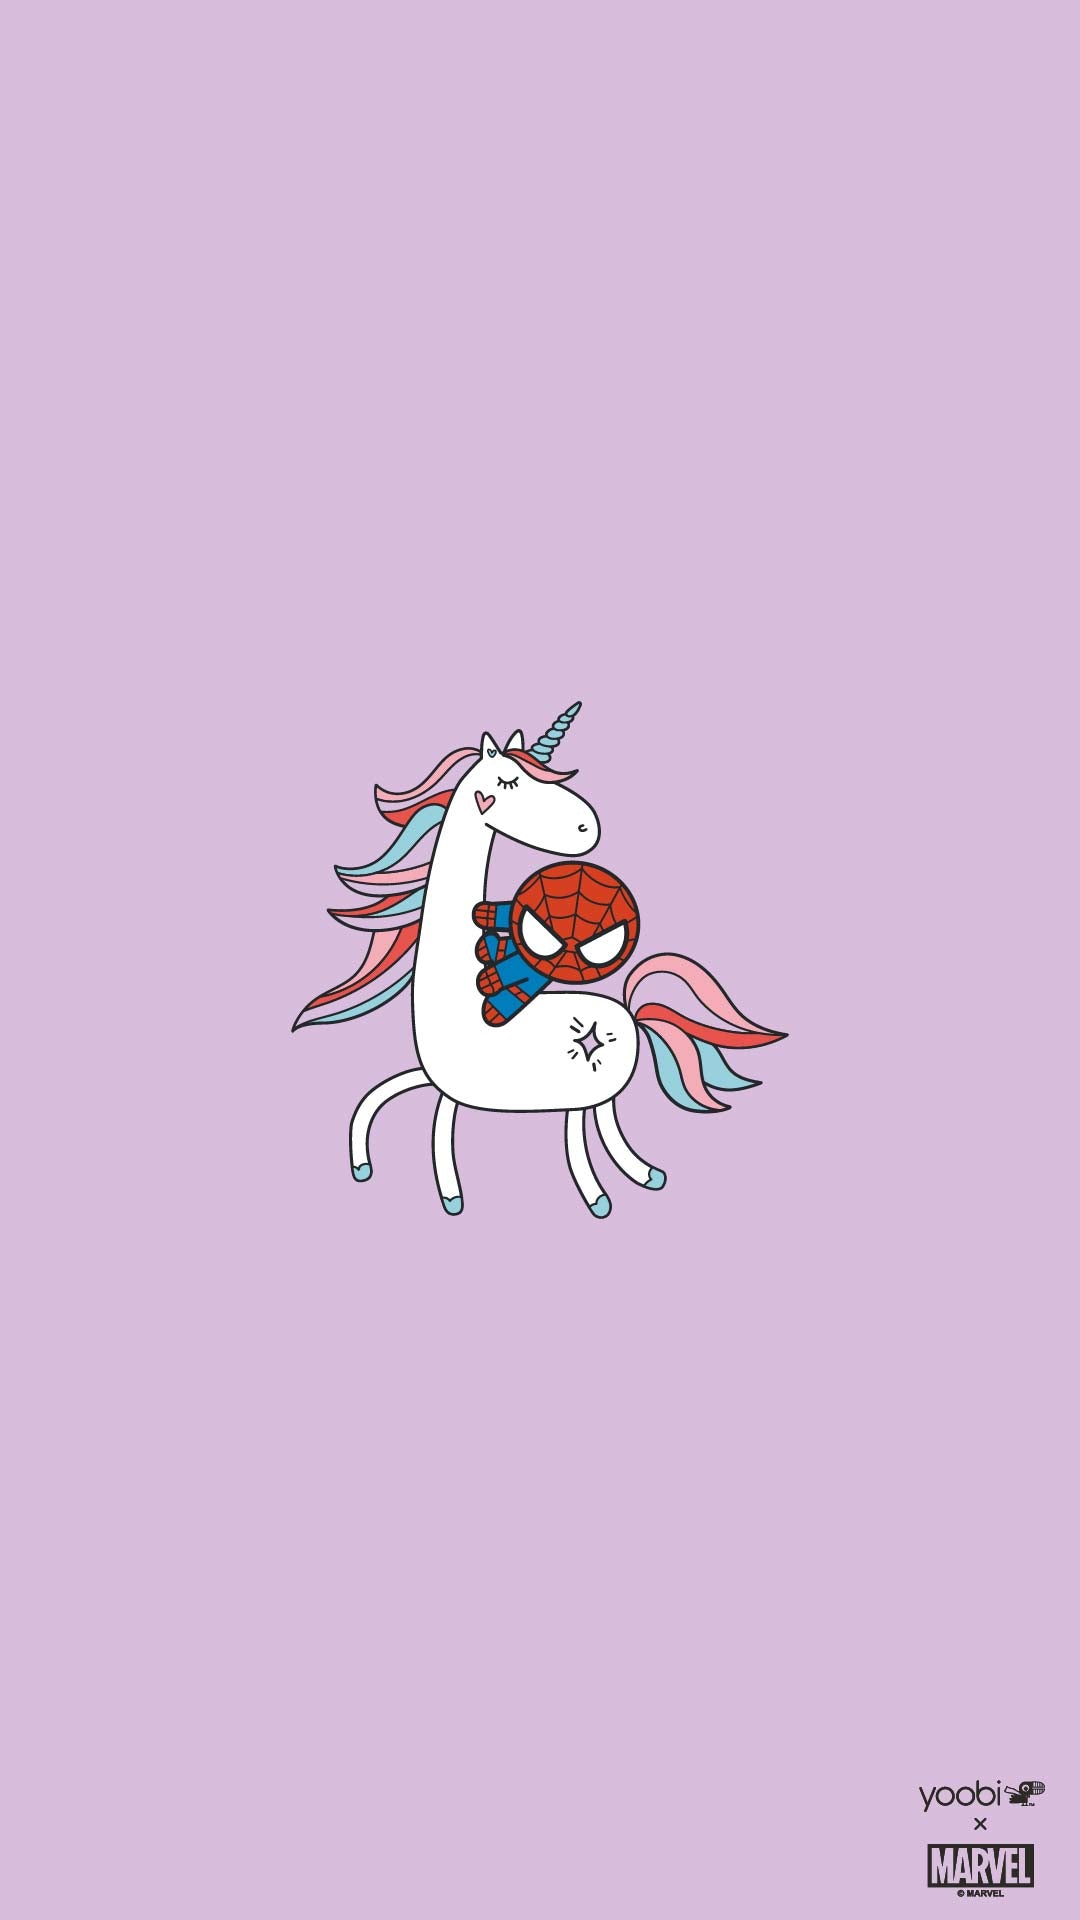 A unicorn with an apple on its head - Marvel